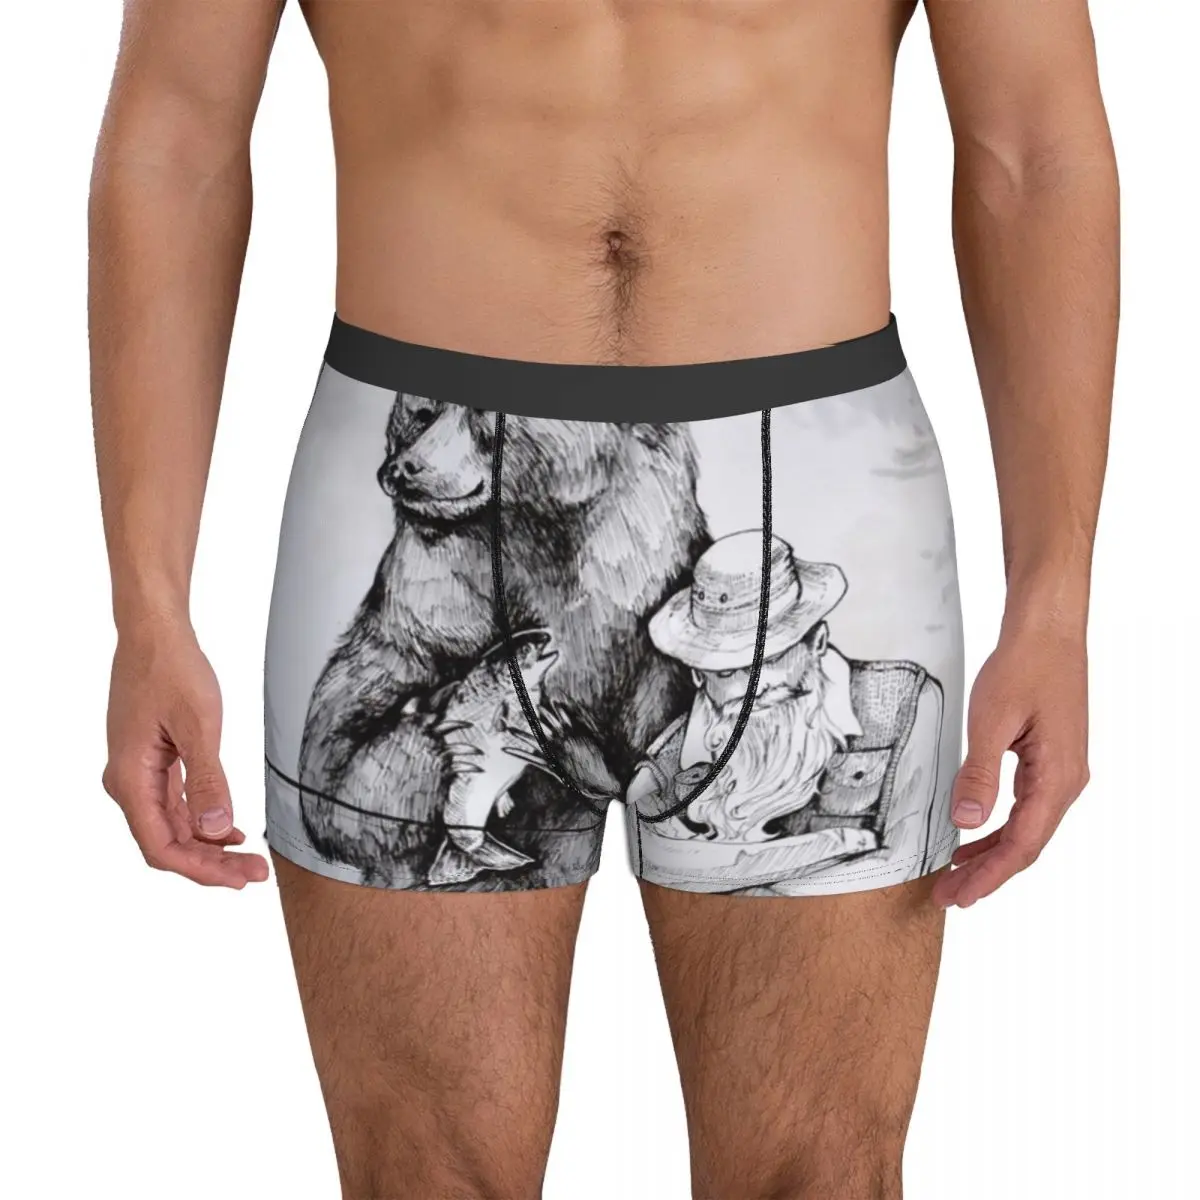 Fishing Buddies Underwear Hobby Stretch Panties Design Boxer Brief Pouch Men Plus Size Boxer Shorts